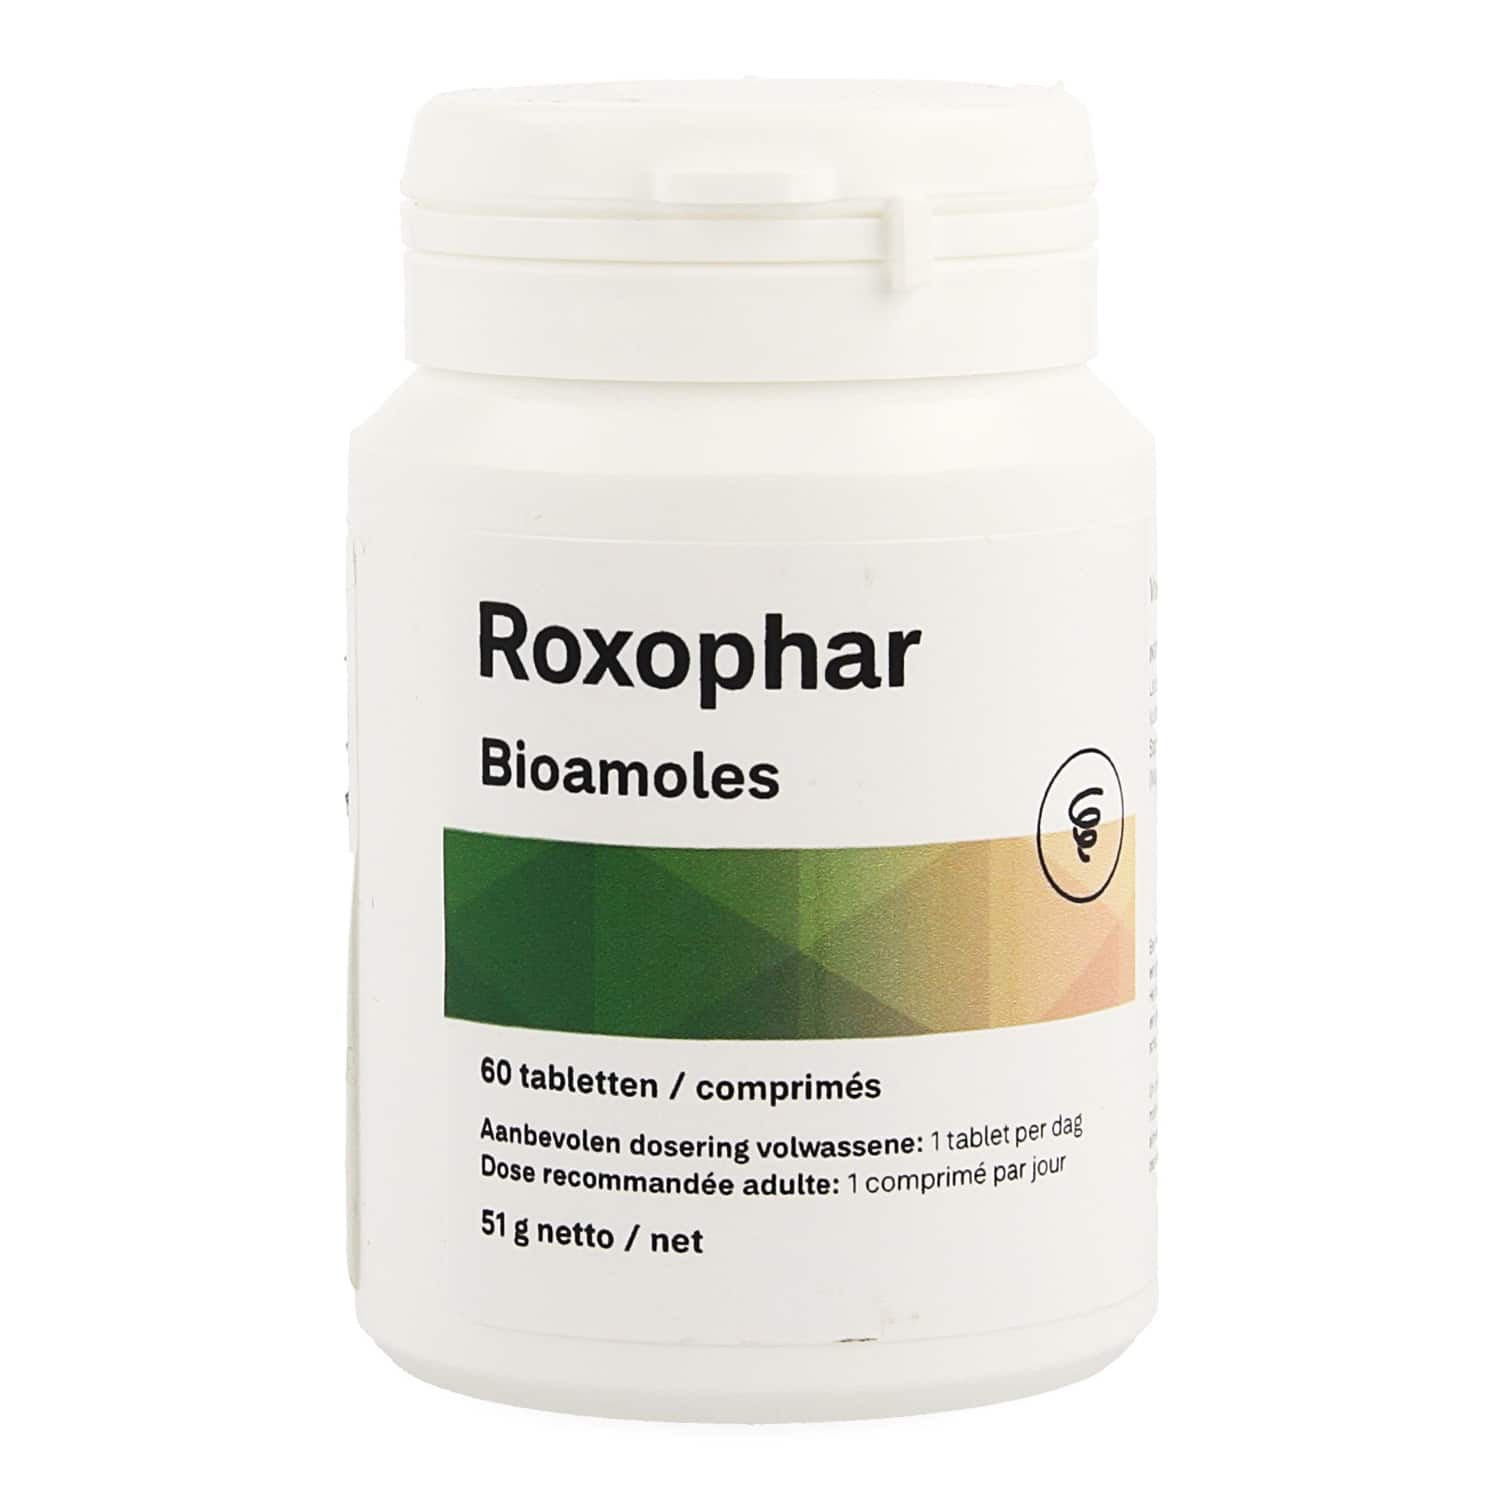 Bioamoles Roxophar